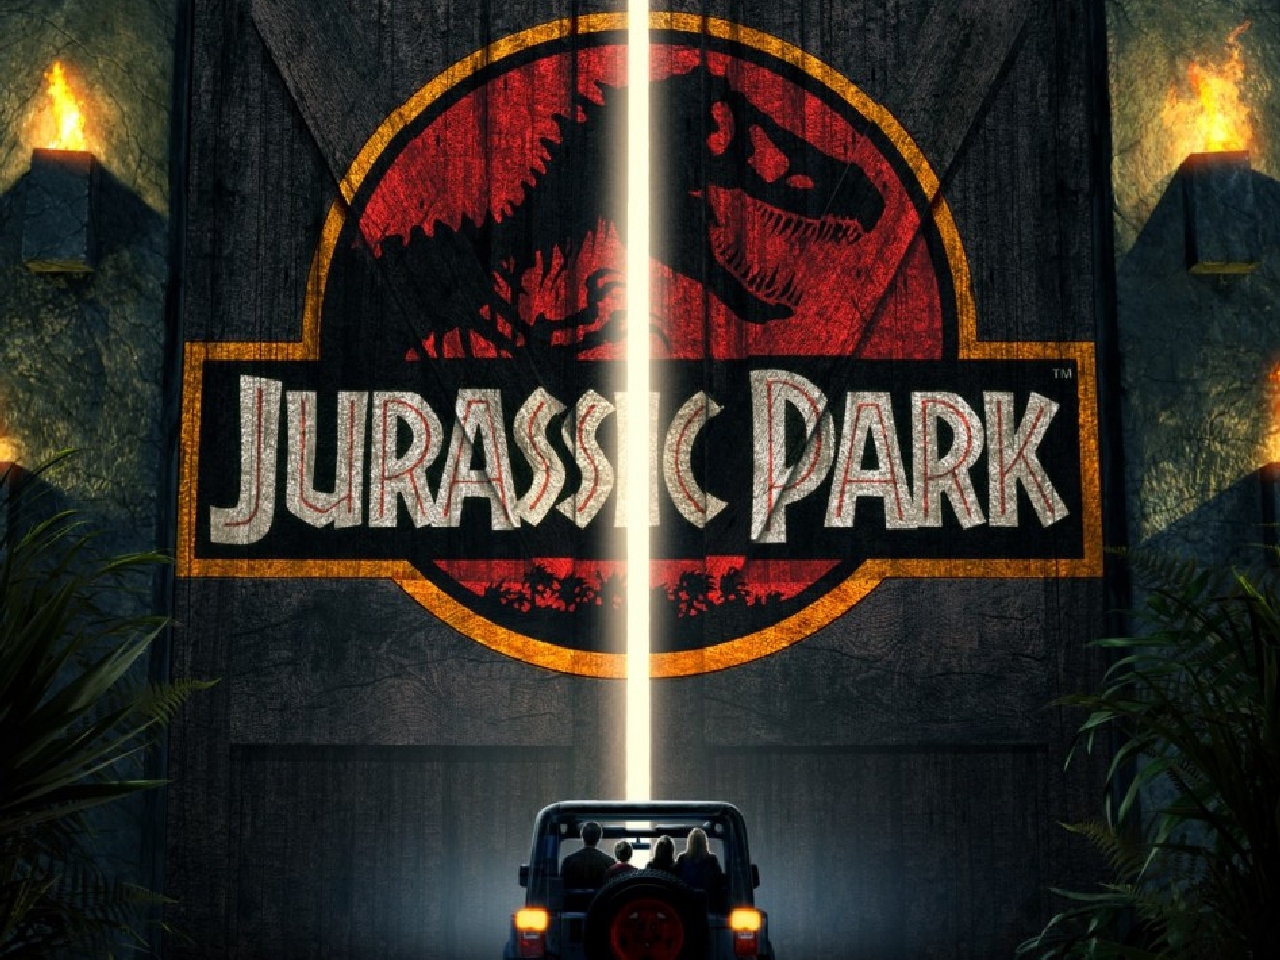 Jurassic Park Puter Wallpaper Desktop Background